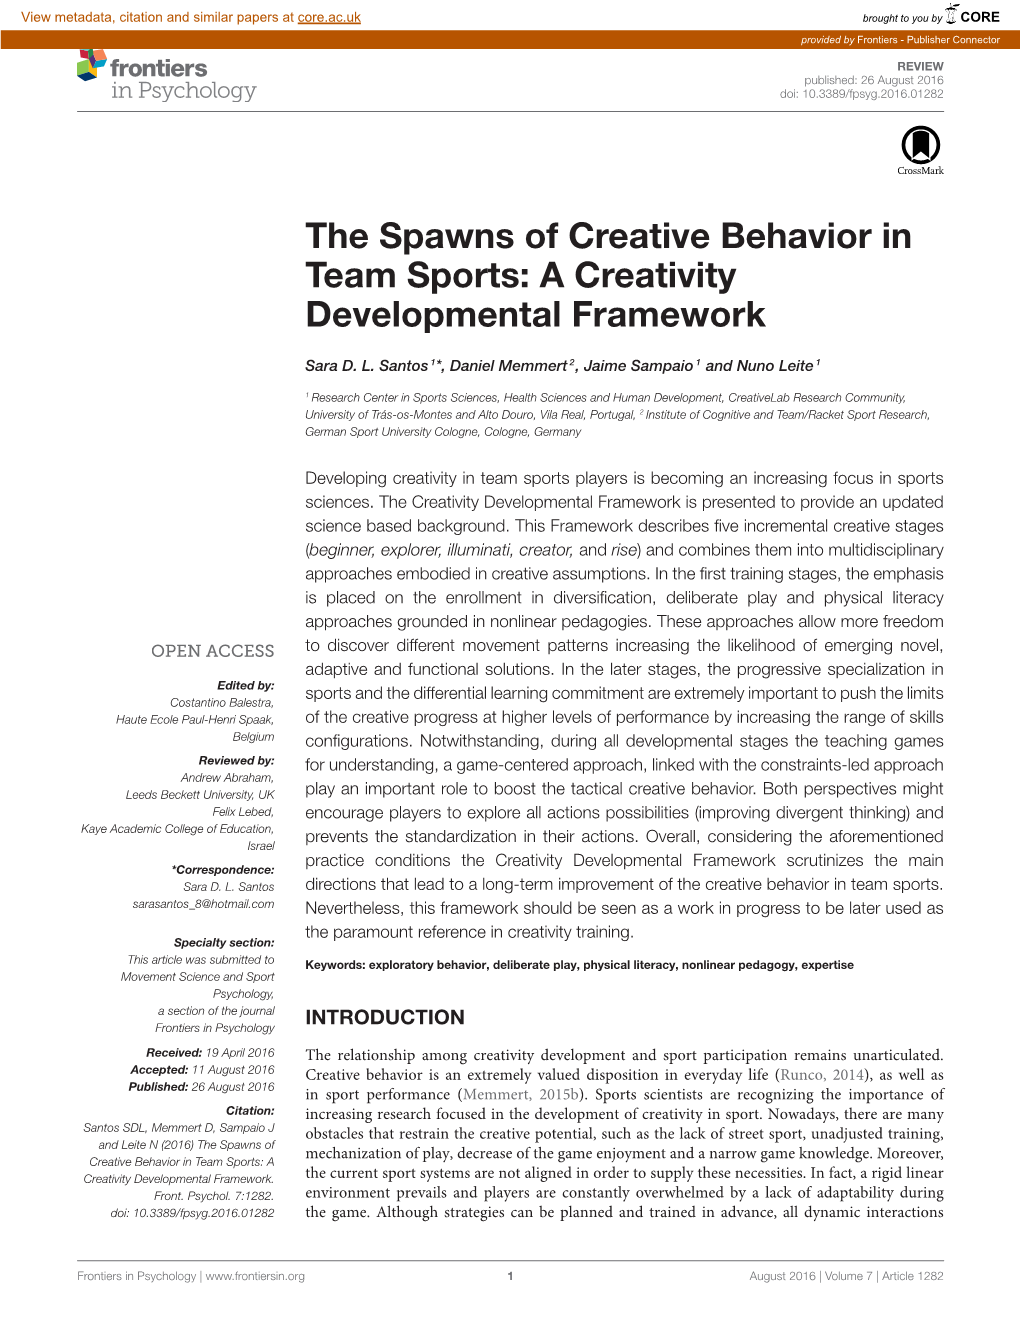 The Spawns of Creative Behavior in Team Sports: a Creativity Developmental Framework